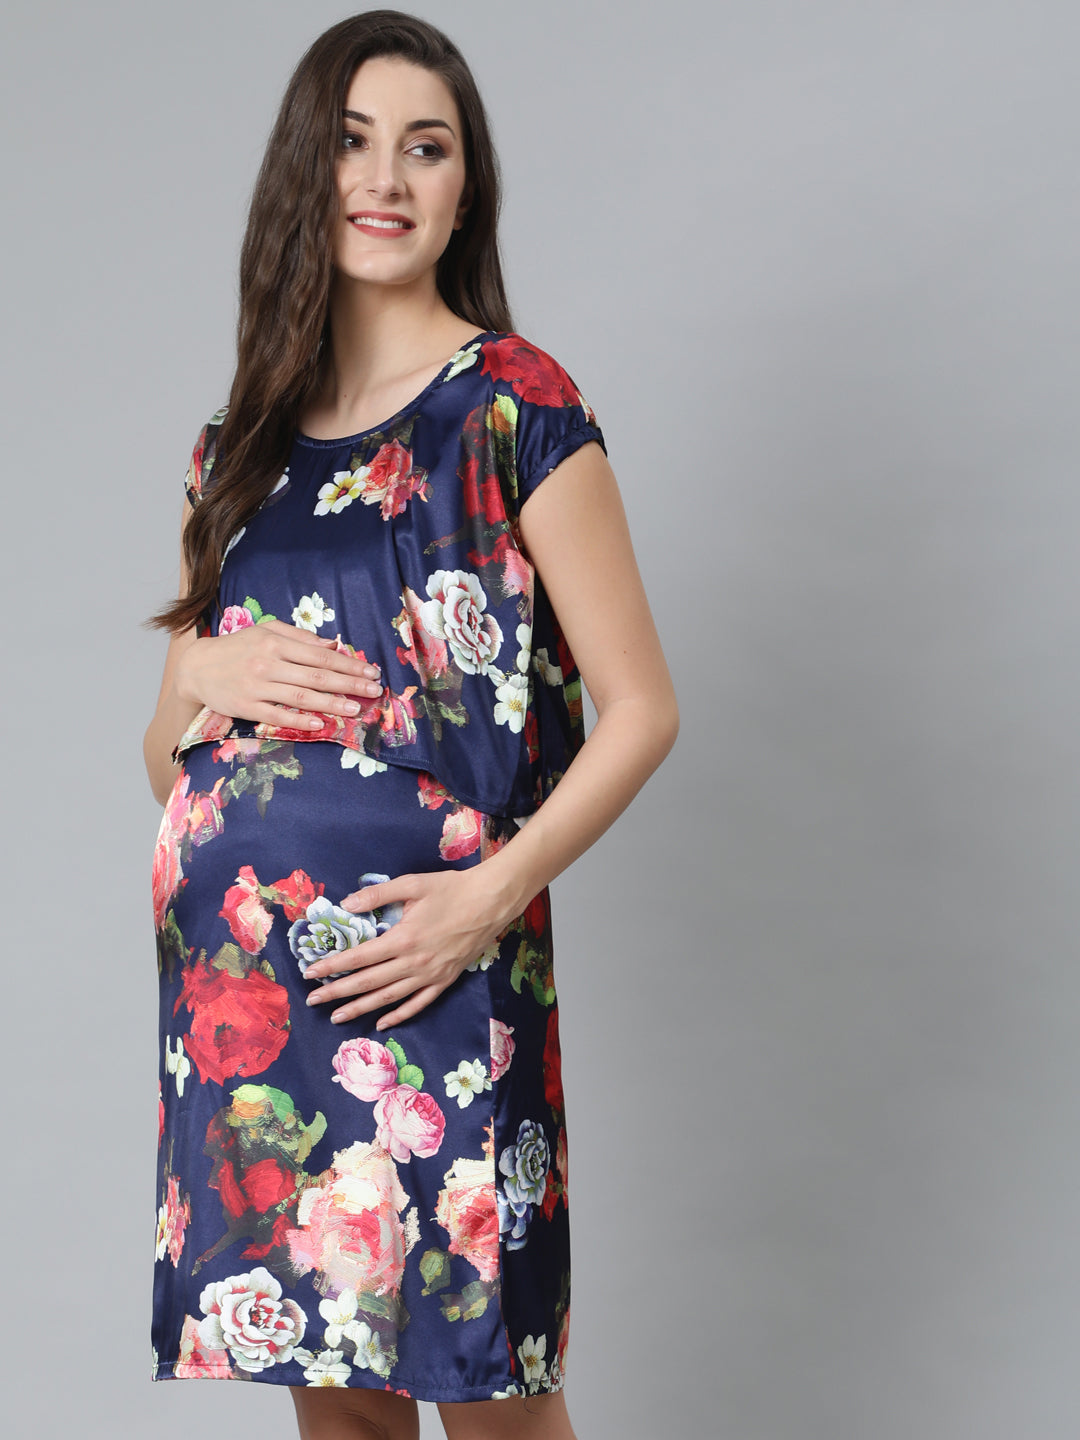 Women's Blue Floral Print Maternity Shift Dress - Aks